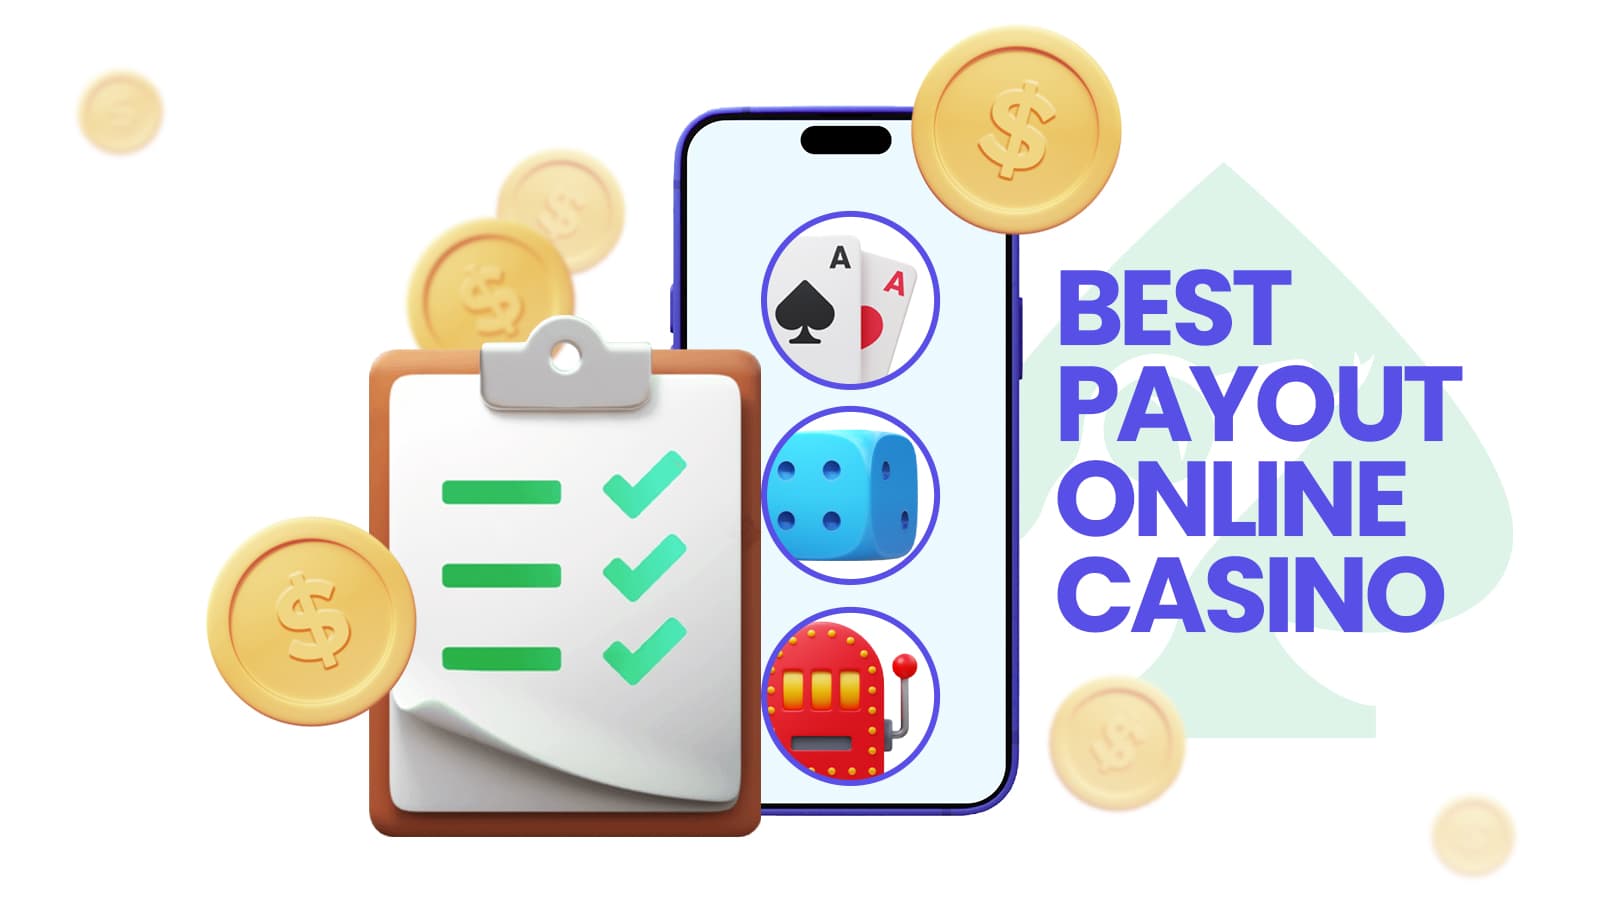 Best payout online casino